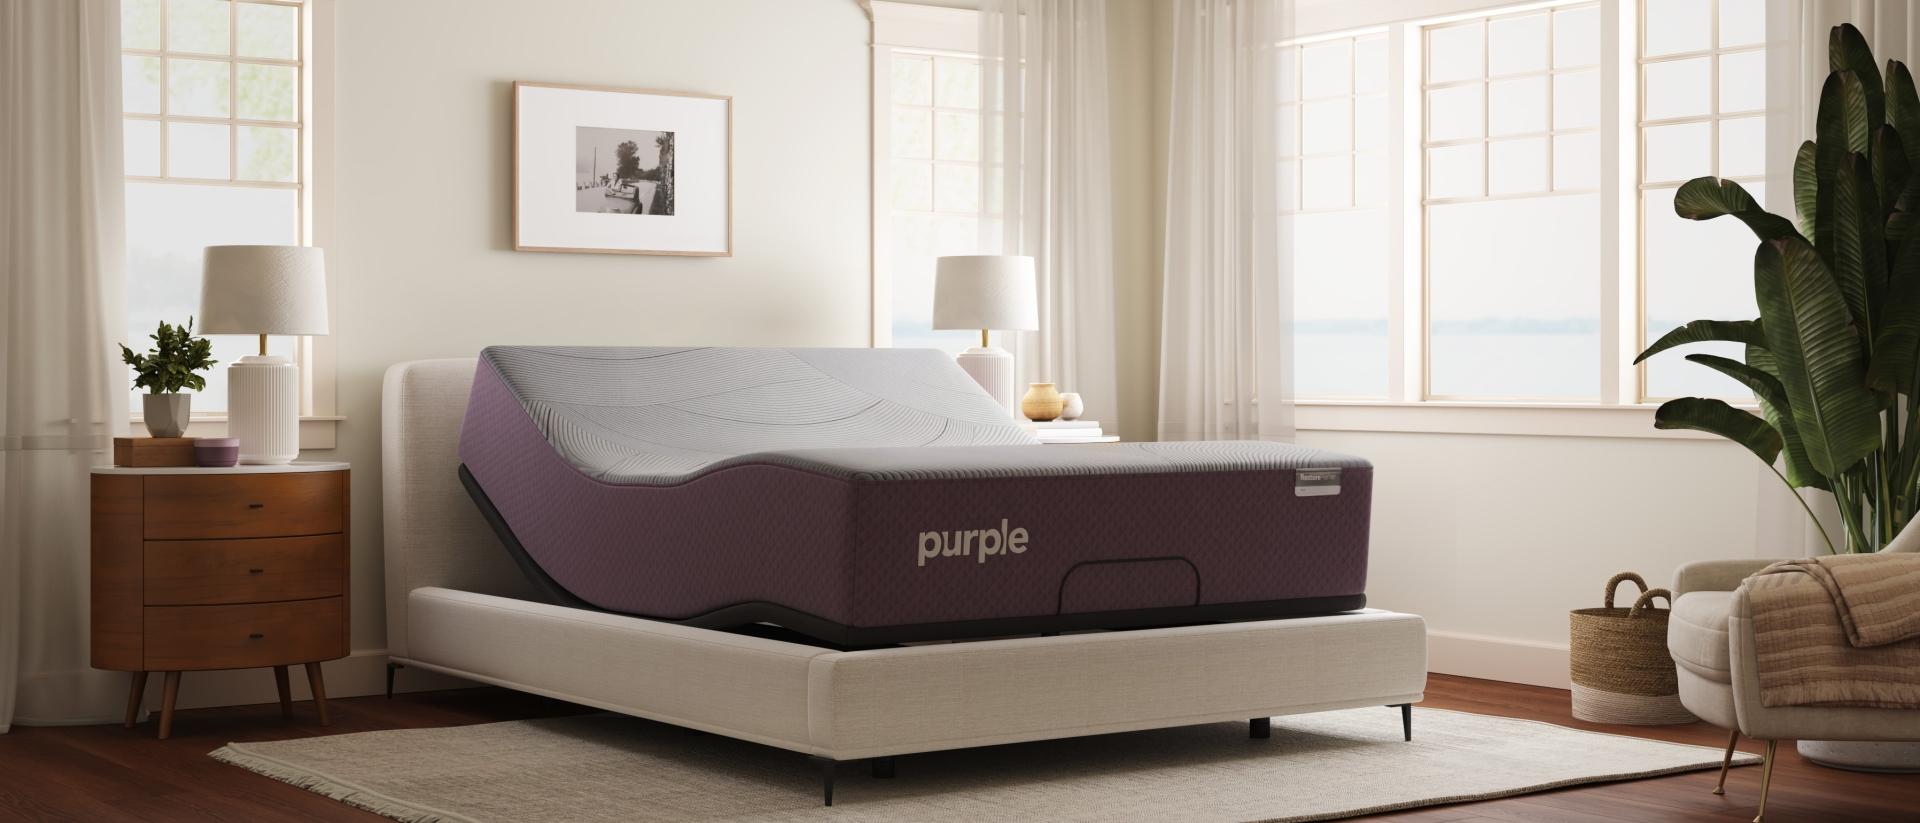 Purple RestorePremier Hybrid mattress on the Purple Premium Smart Base in a bright bedroom.